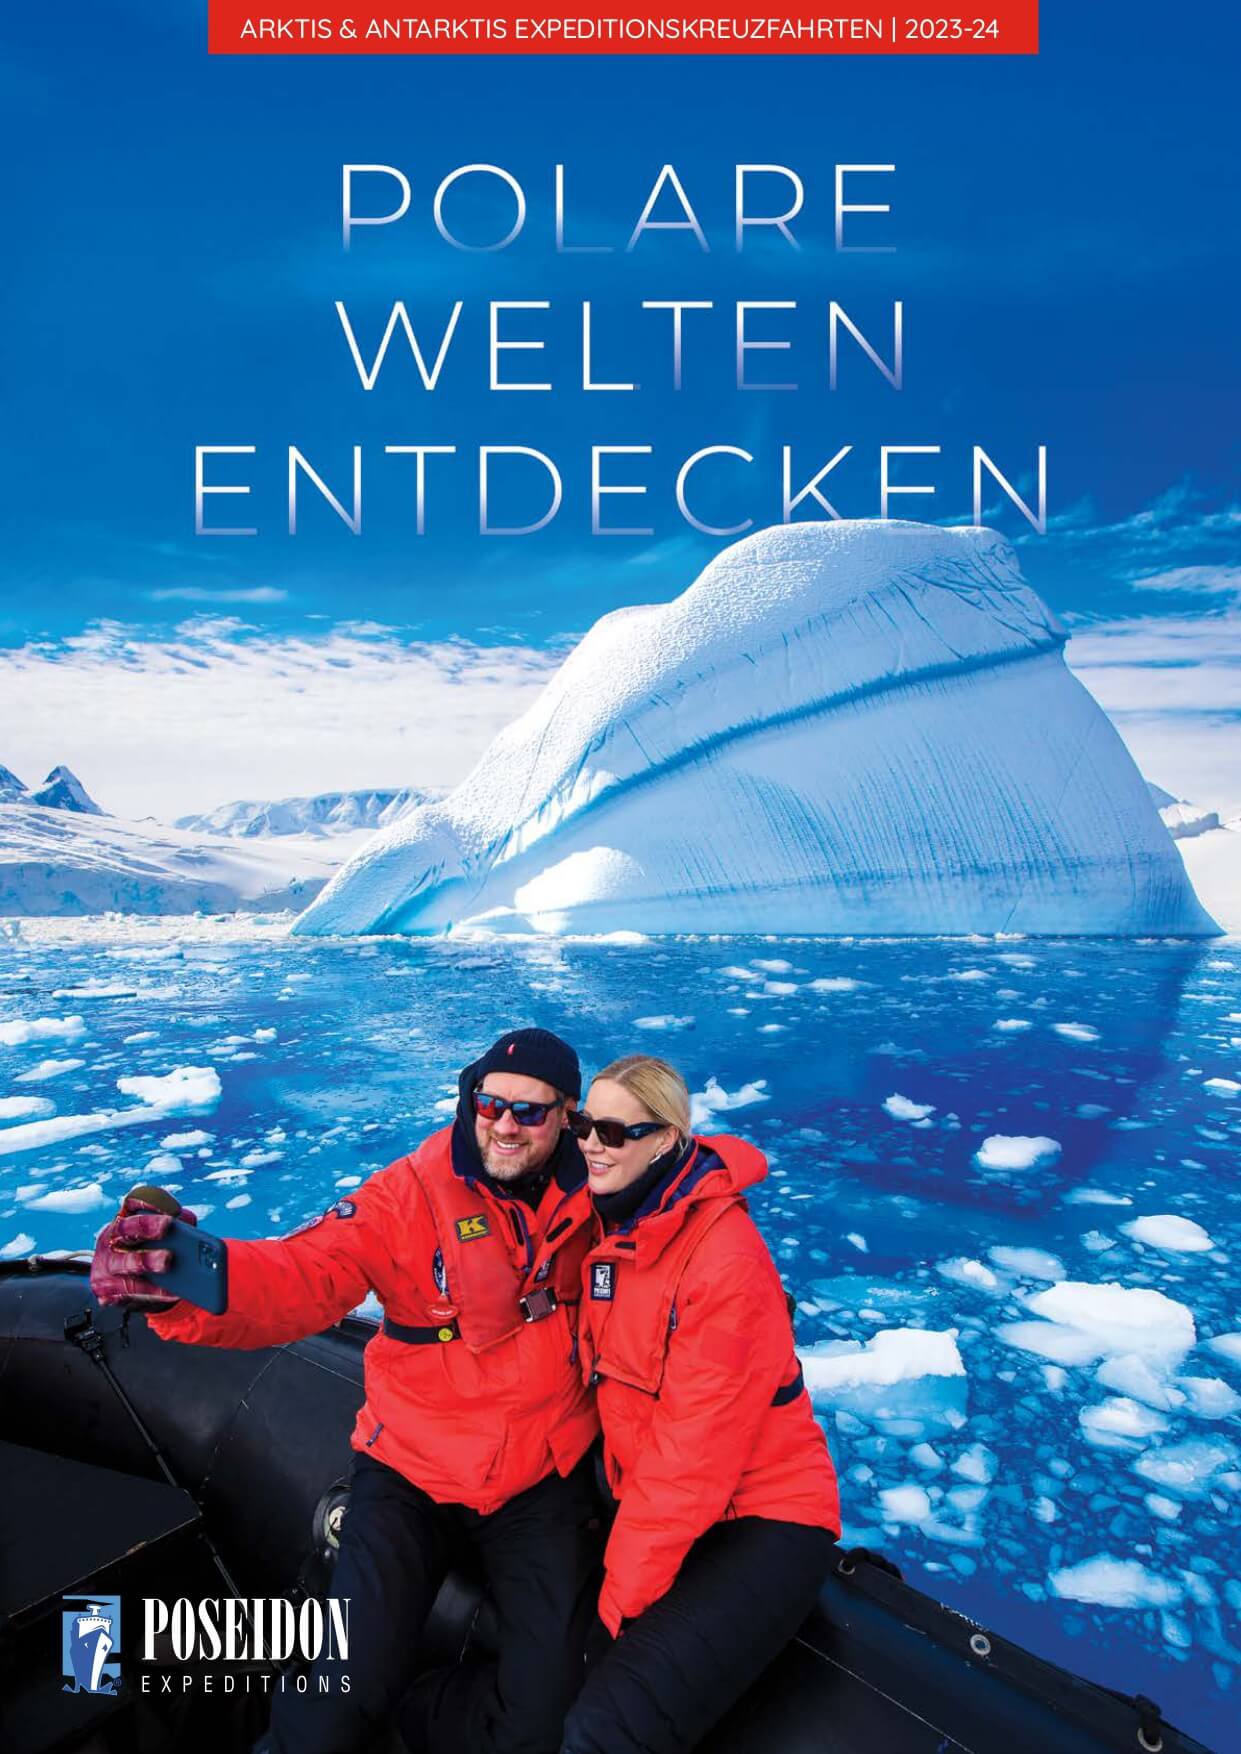 Arctic and Antarctica 2023-24 (German)